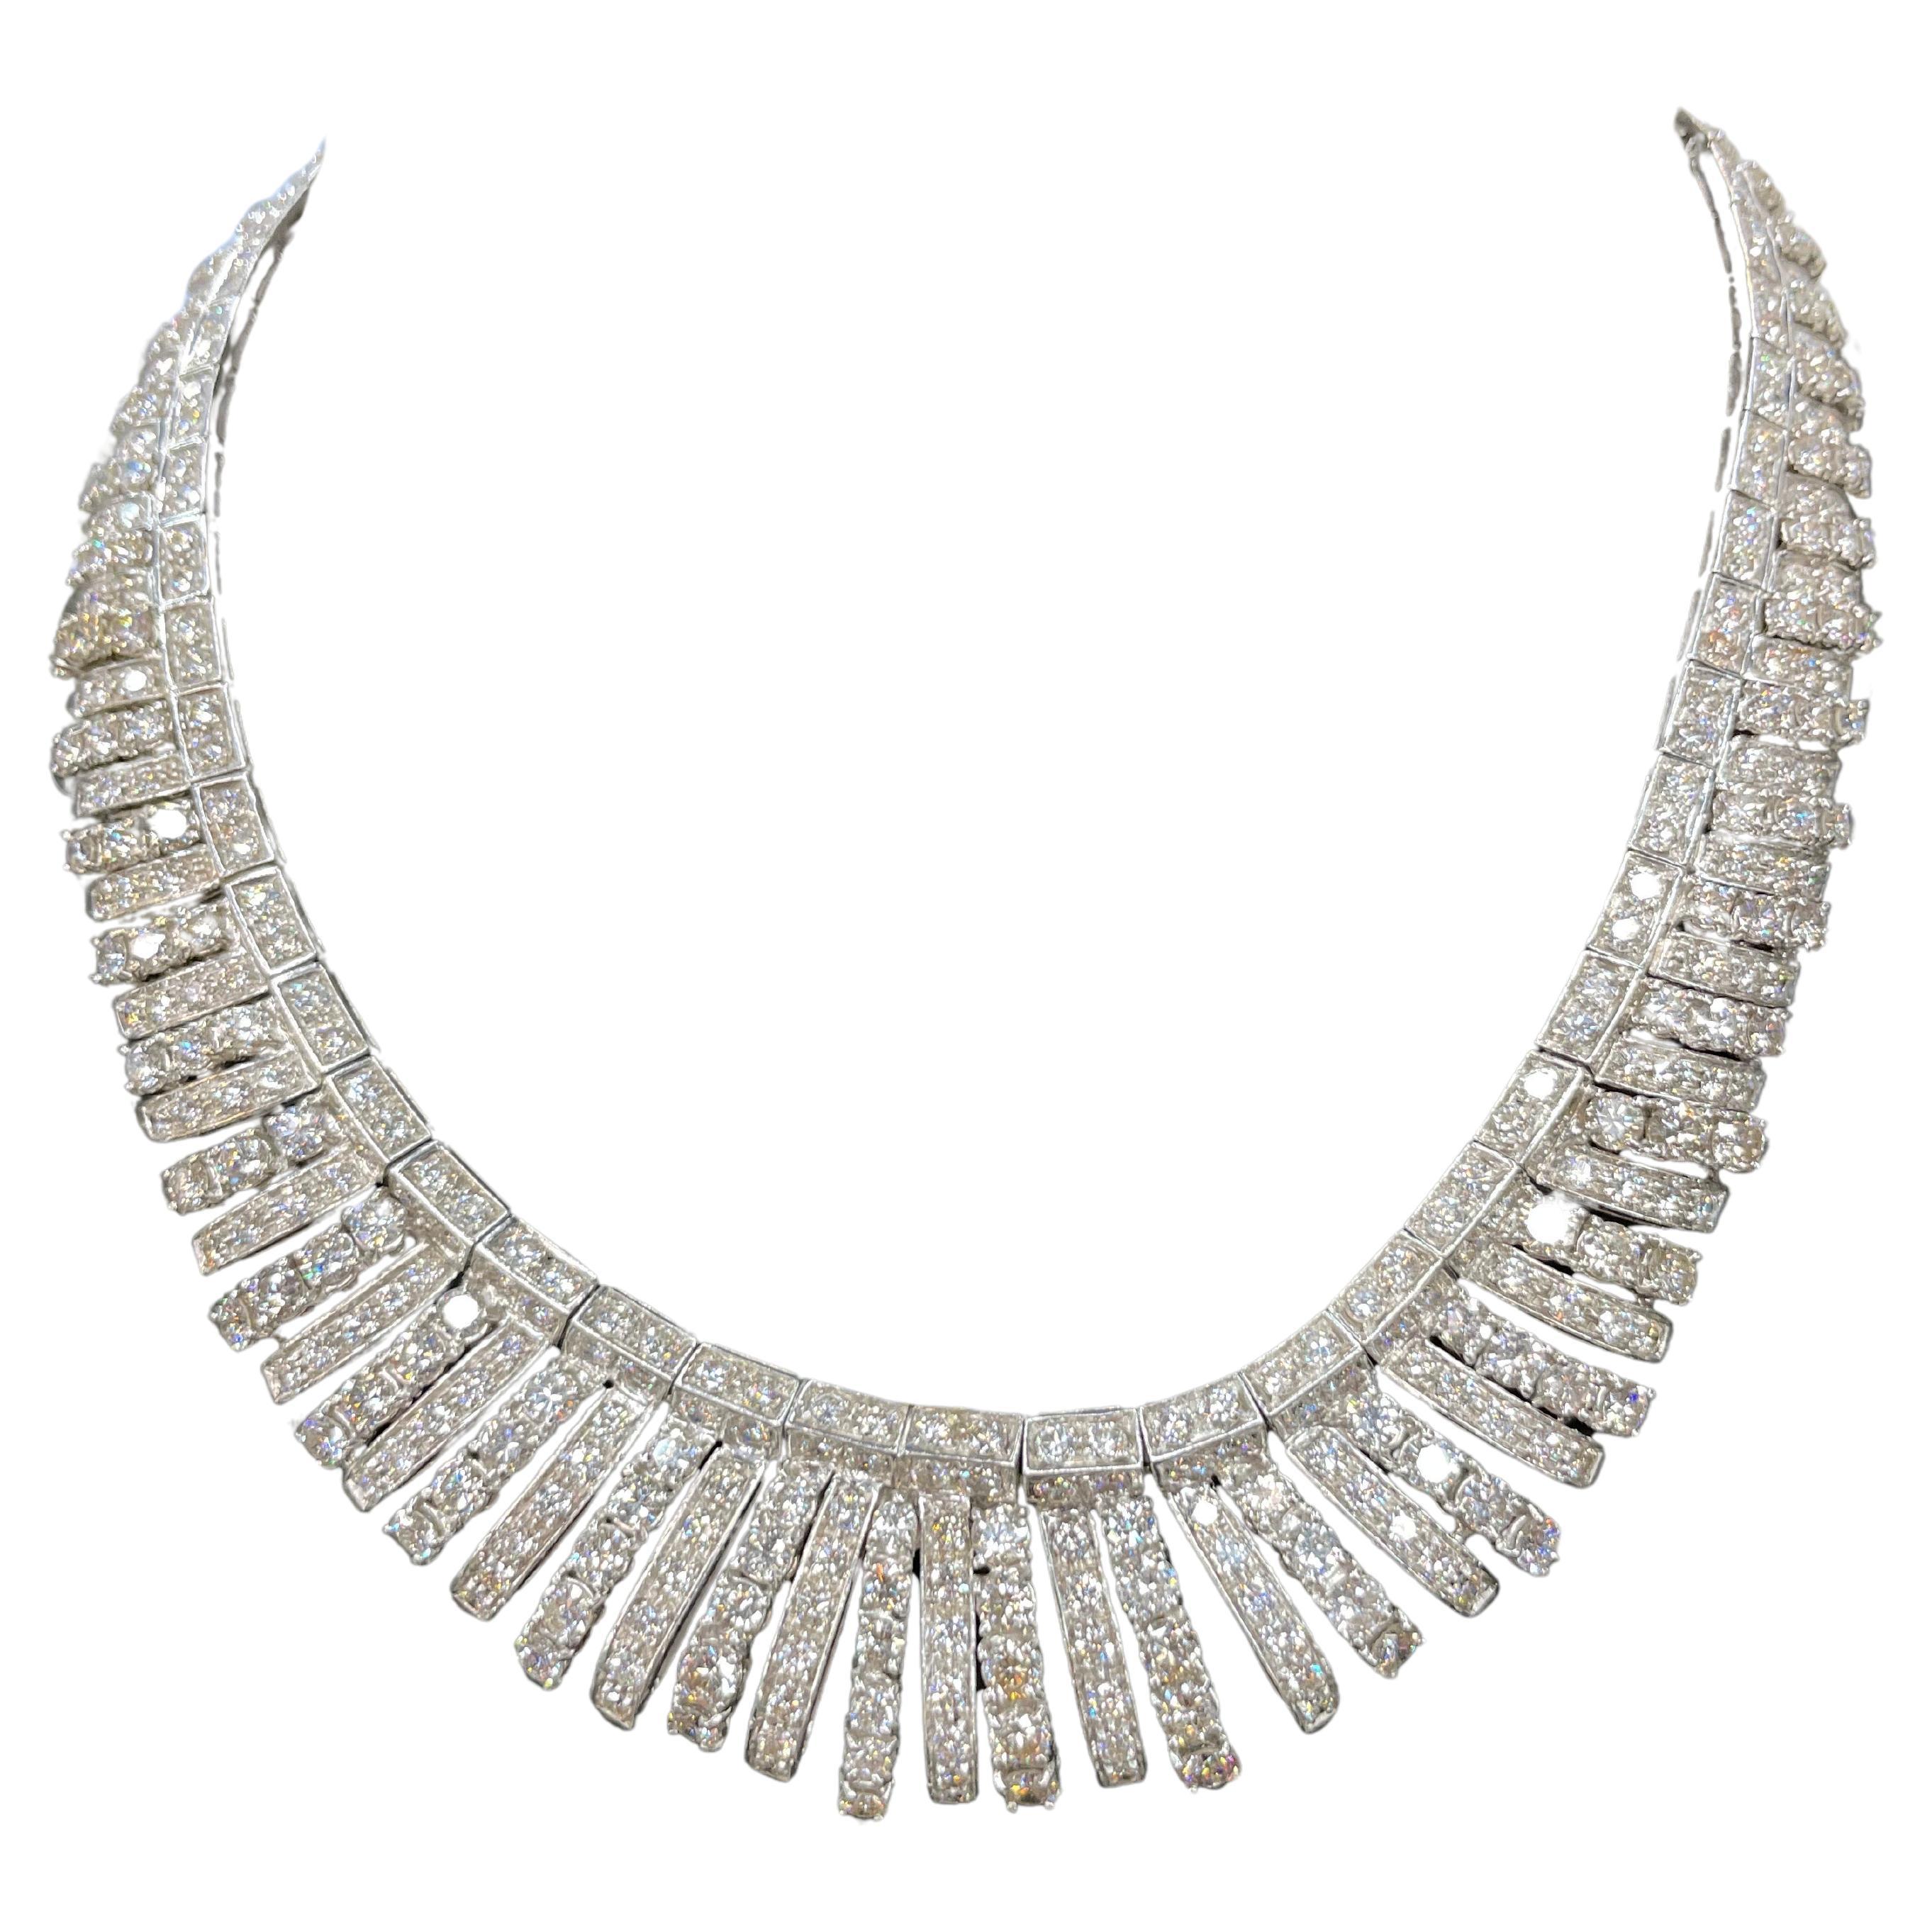 Vintage Diamond Collar Bib Necklace 66 Carats 18 Karat White Gold 113.5 Grams For Sale